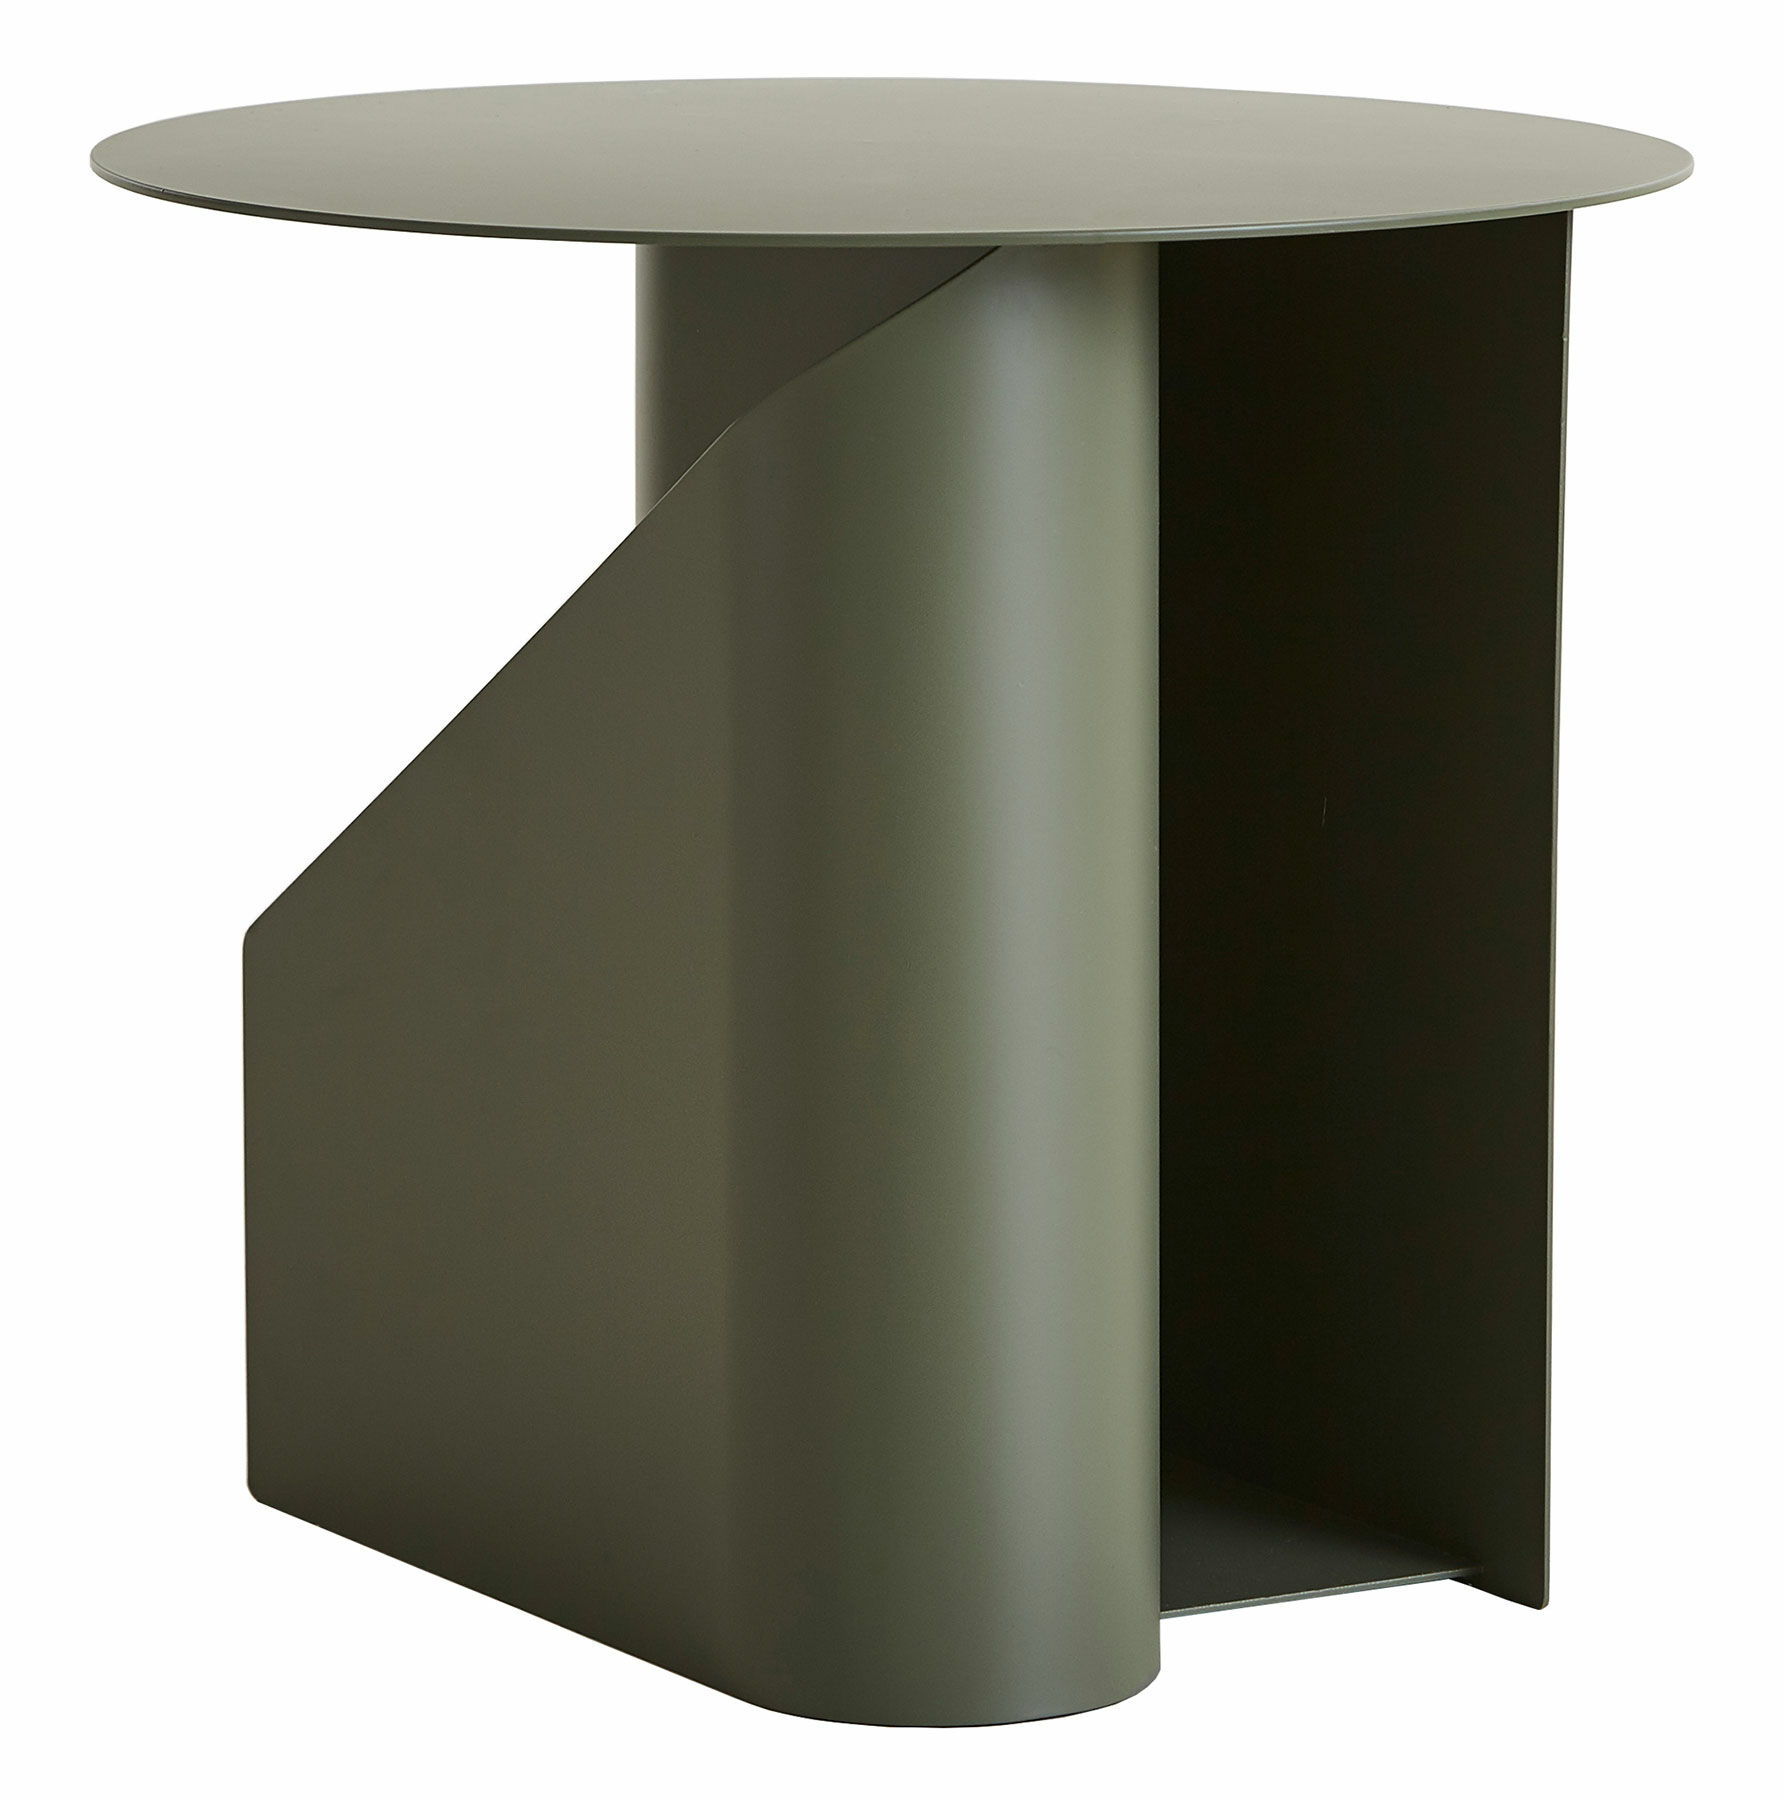 Side table "Sentrum", version dusty green by Woud